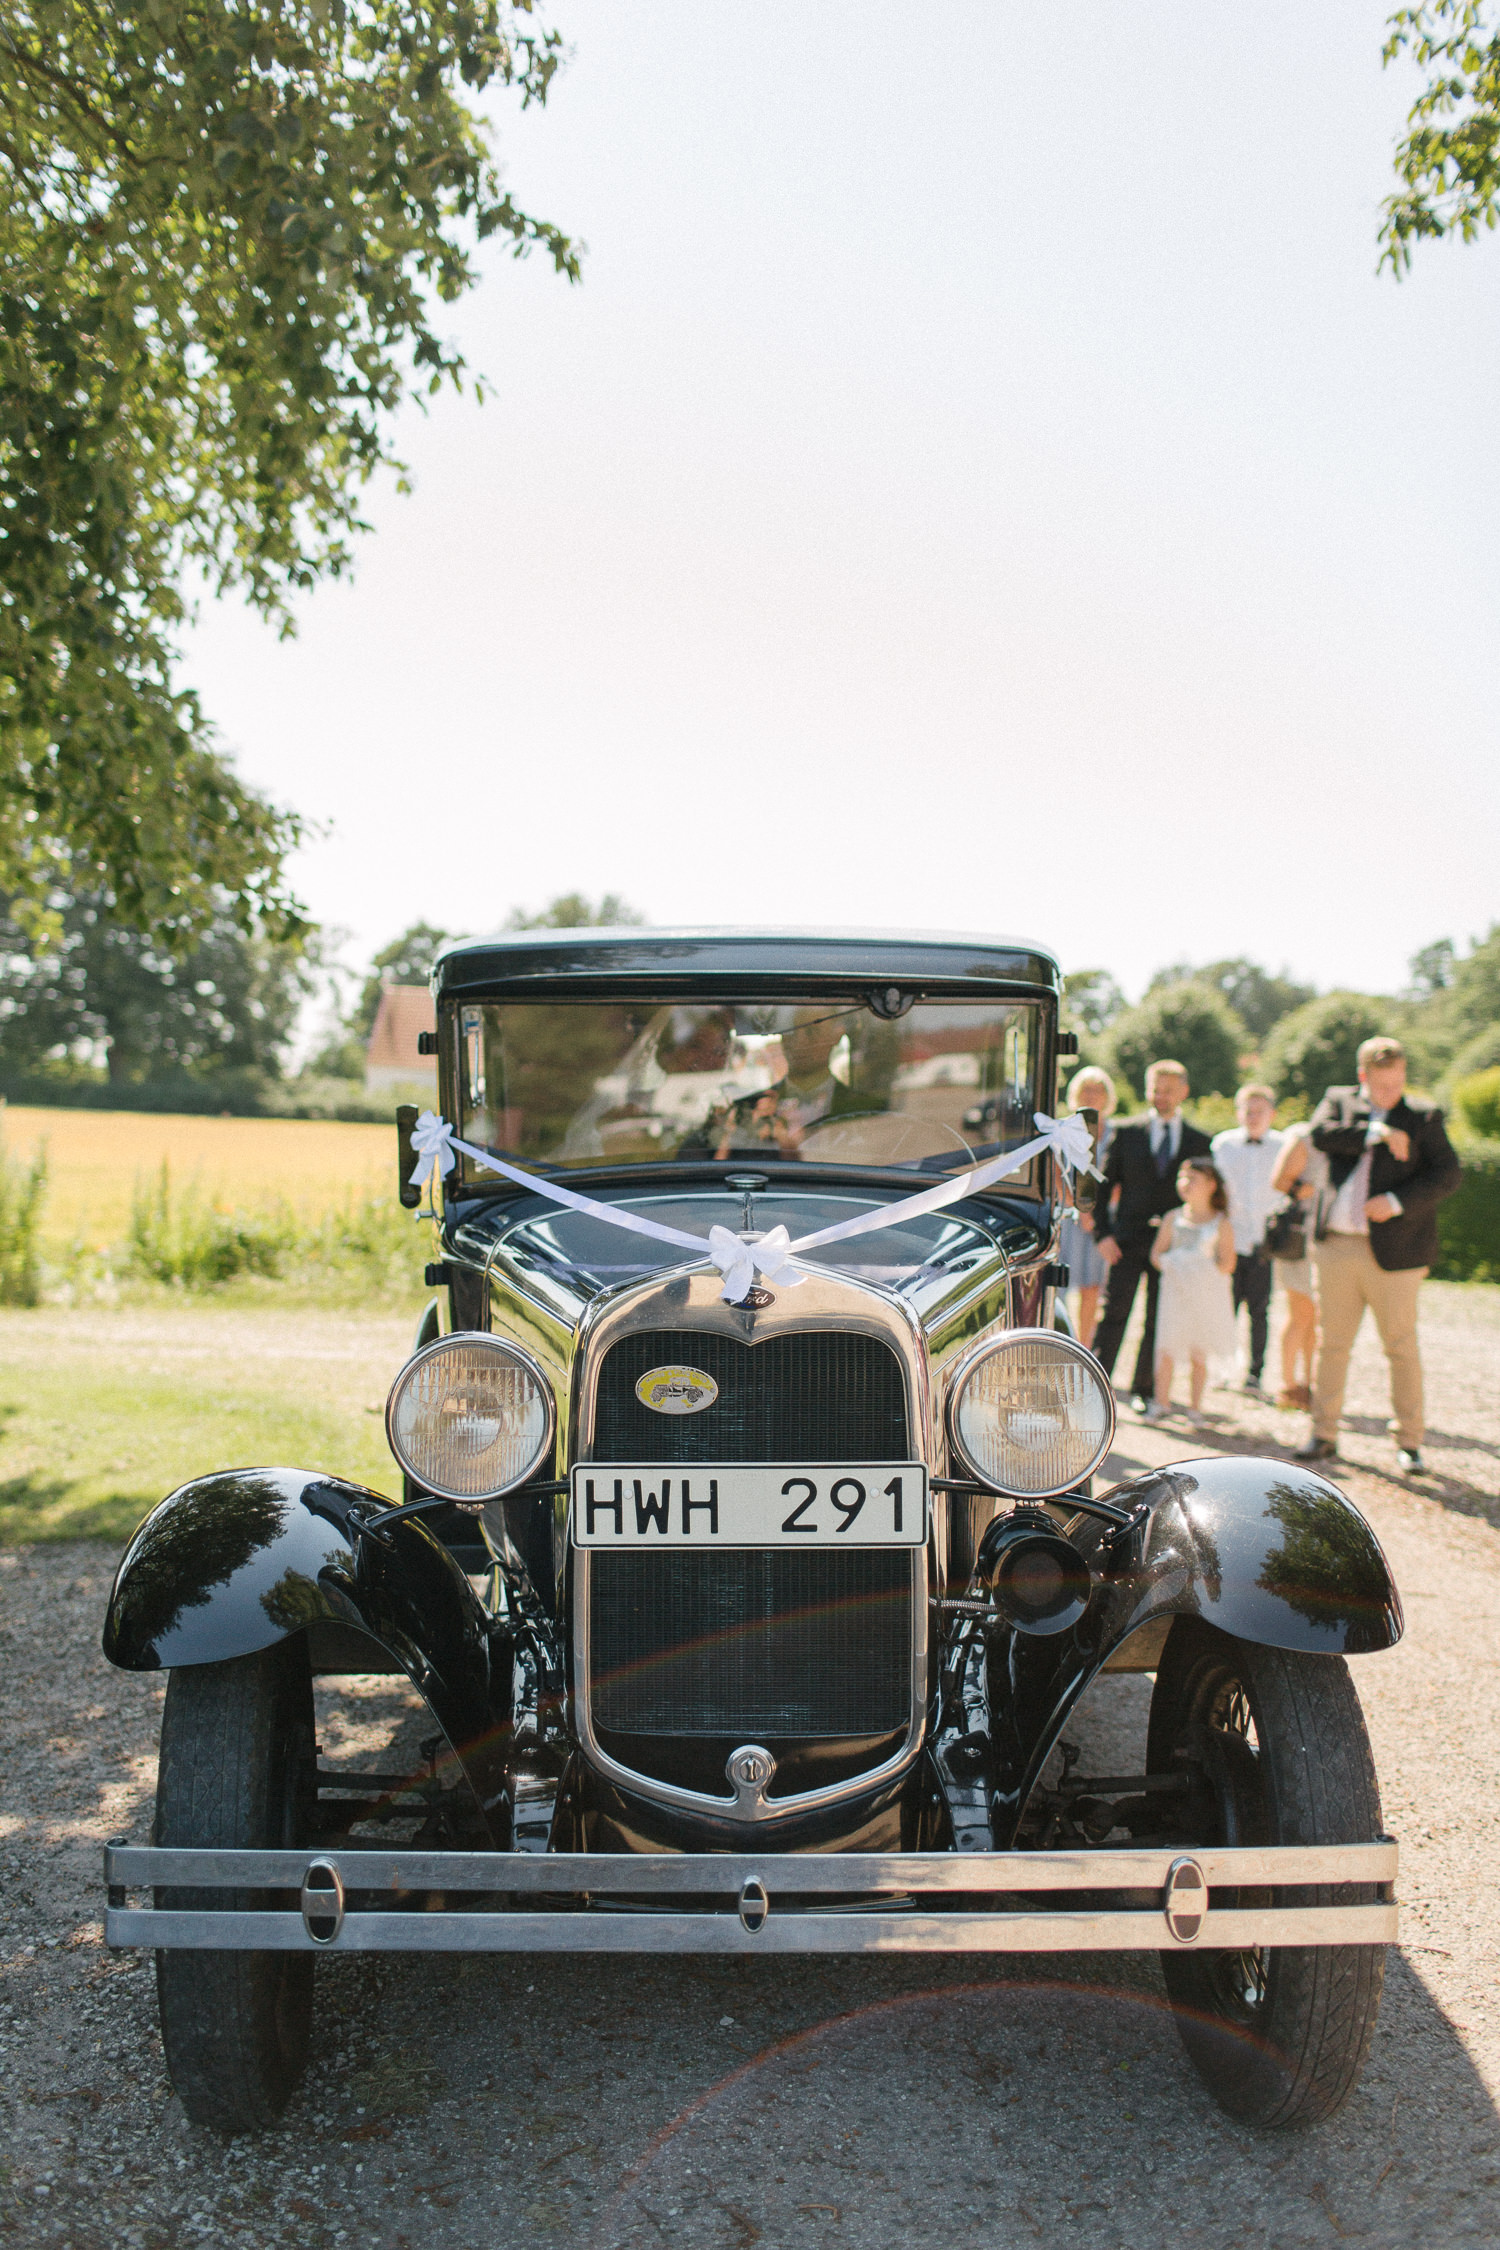 Hyra veteranbil till bröllop i Skåne. Foto: Tove Lundquist, bröllopsfotograf i Malmö.